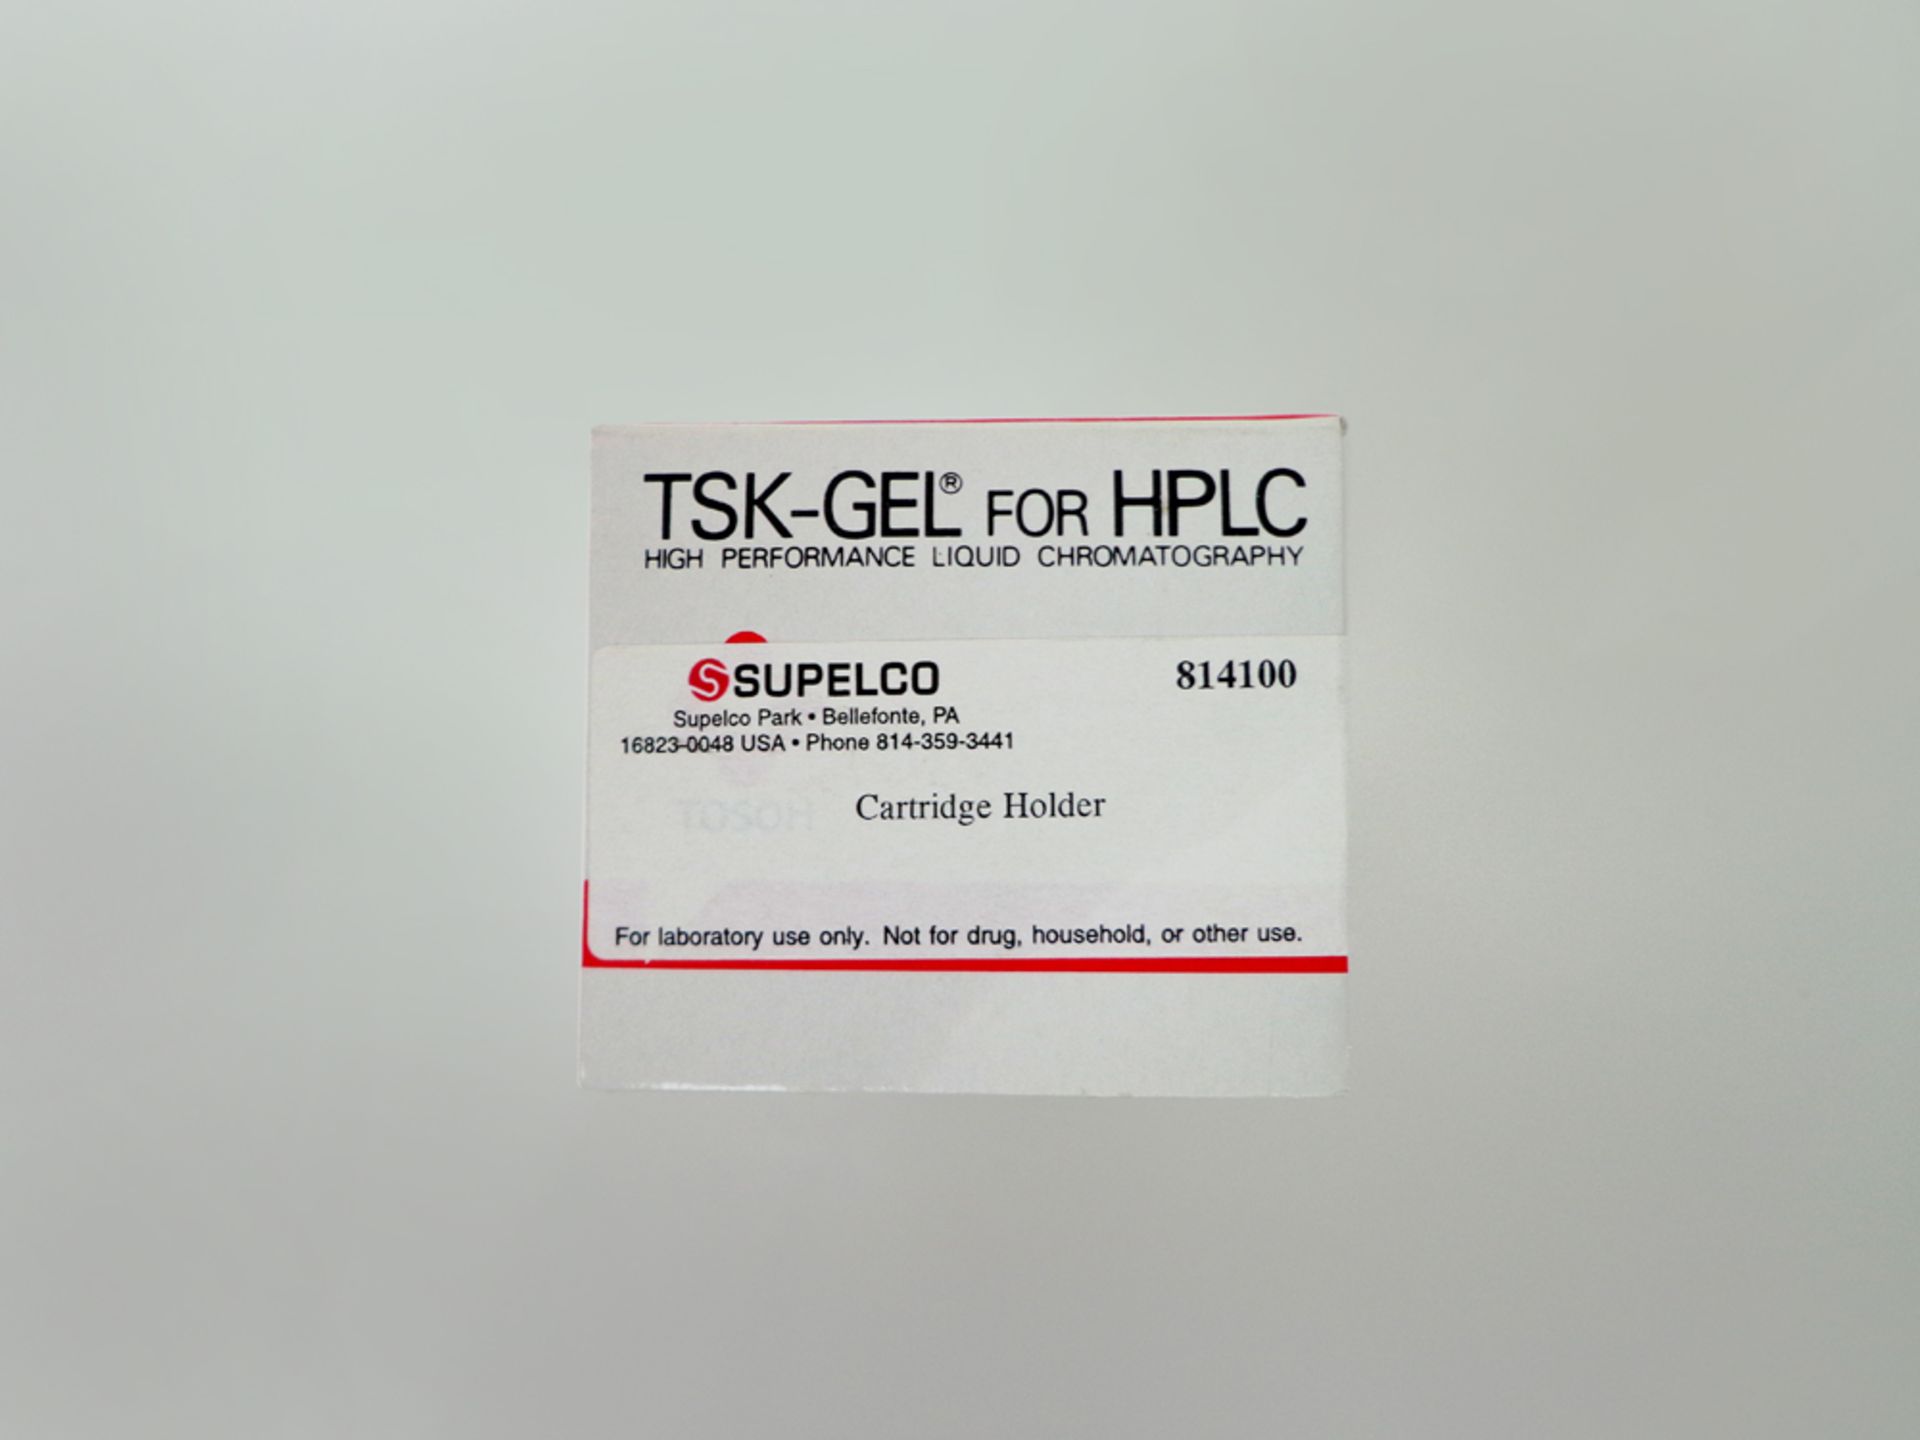 Supelco HPLC Cartridge Holder, ref 81400 (Ref: WA11568) - Image 2 of 3